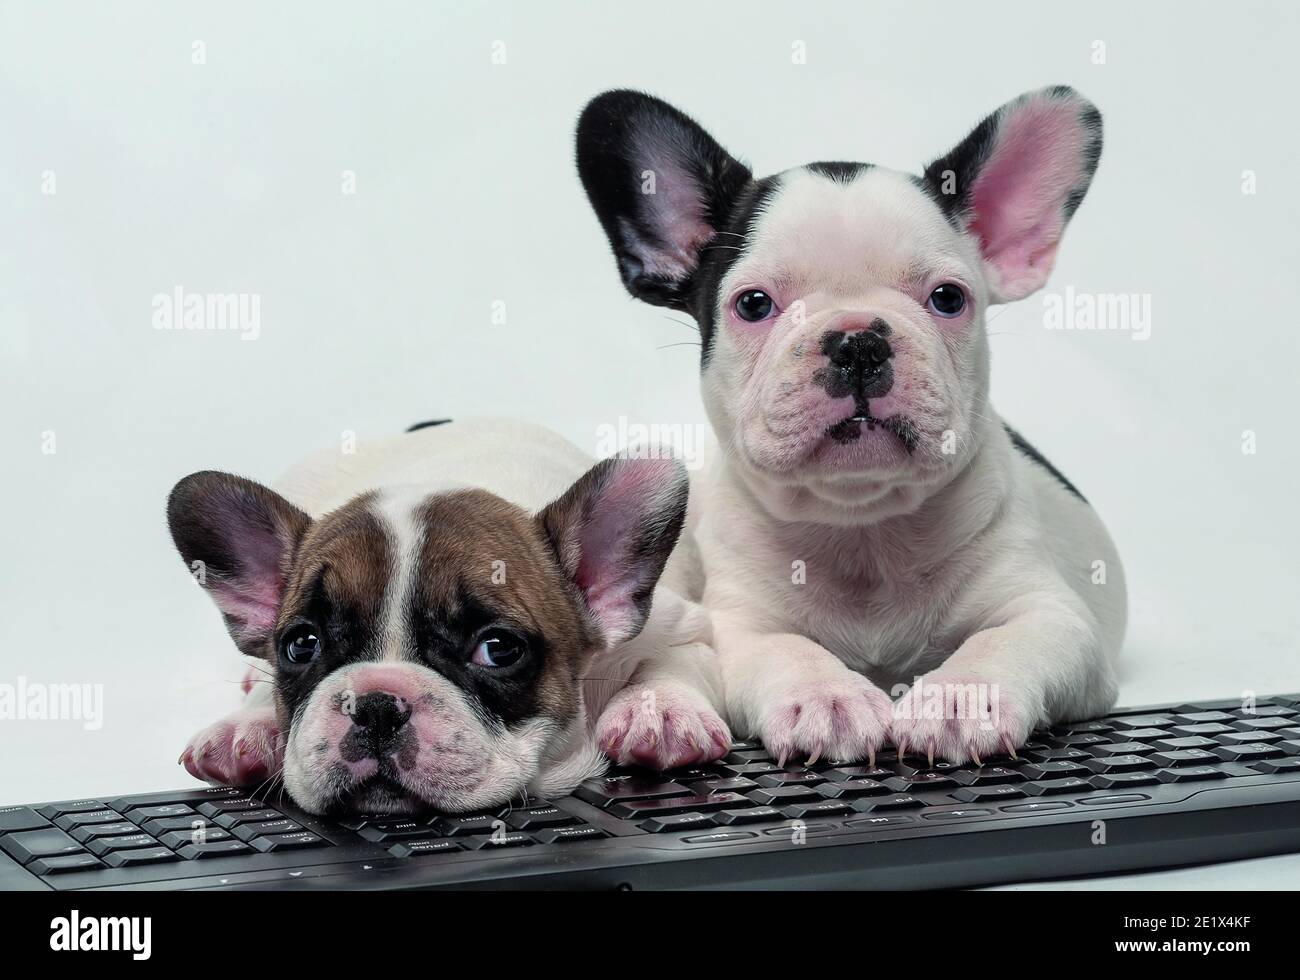 Bulldog francesi, fratelli, bianchi, marroni, neri, cuccioli, sdraiati sulla tastiera, riprese in studio Foto Stock